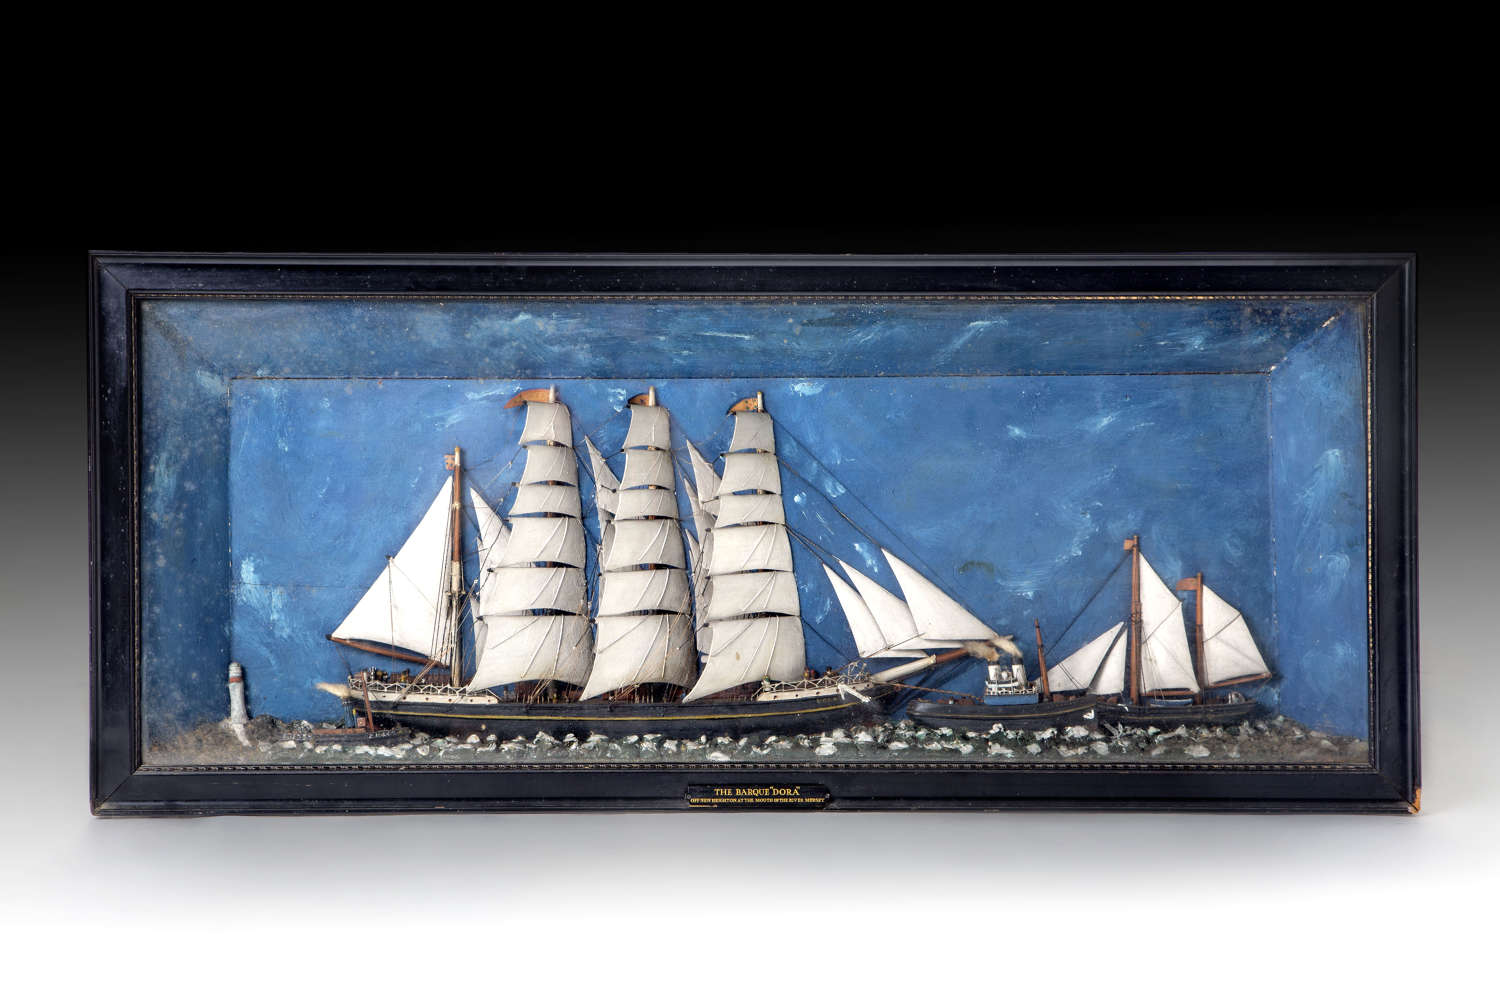 An exceptional 19th century diorama of a ship in choppy seas